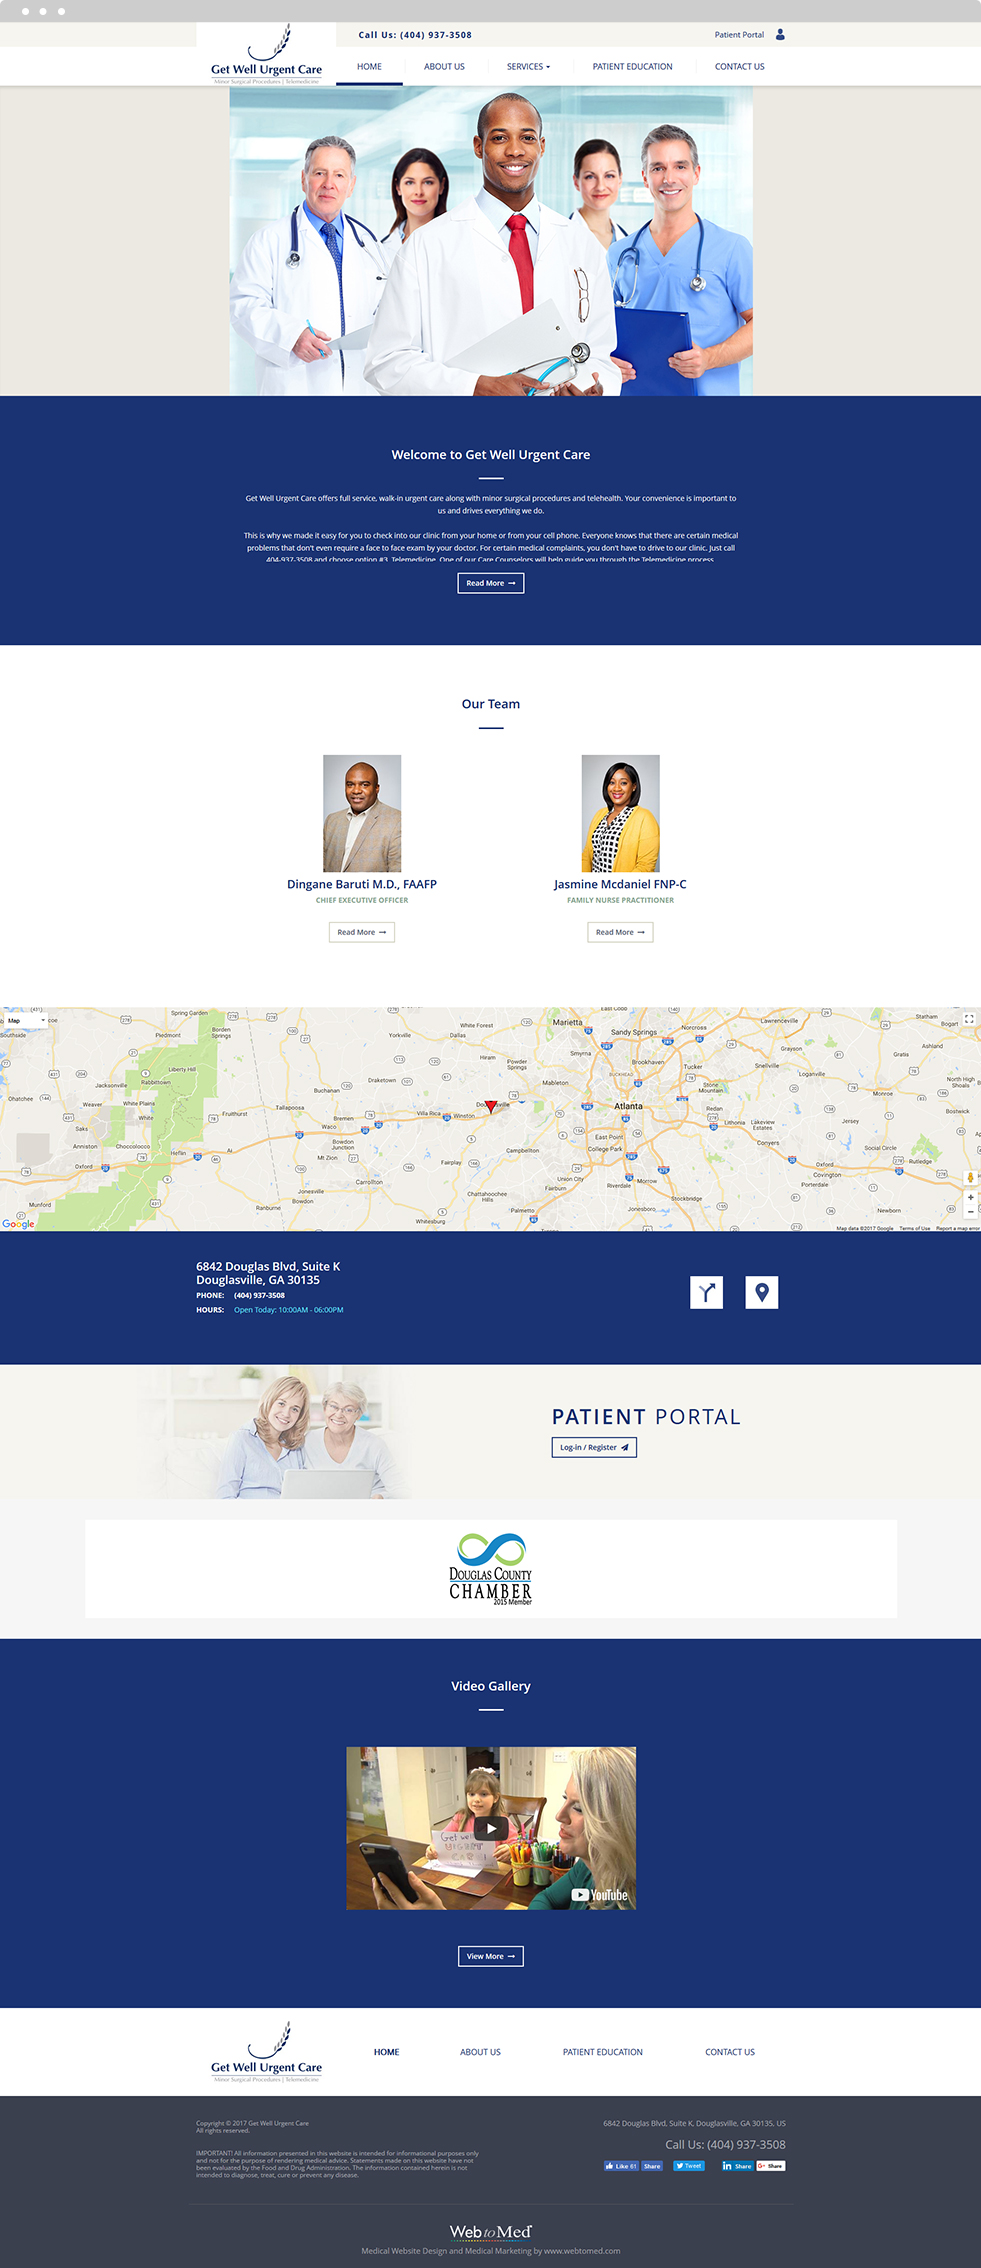 Urgent Care Website Design - Get Well Urgent Care - Homepage